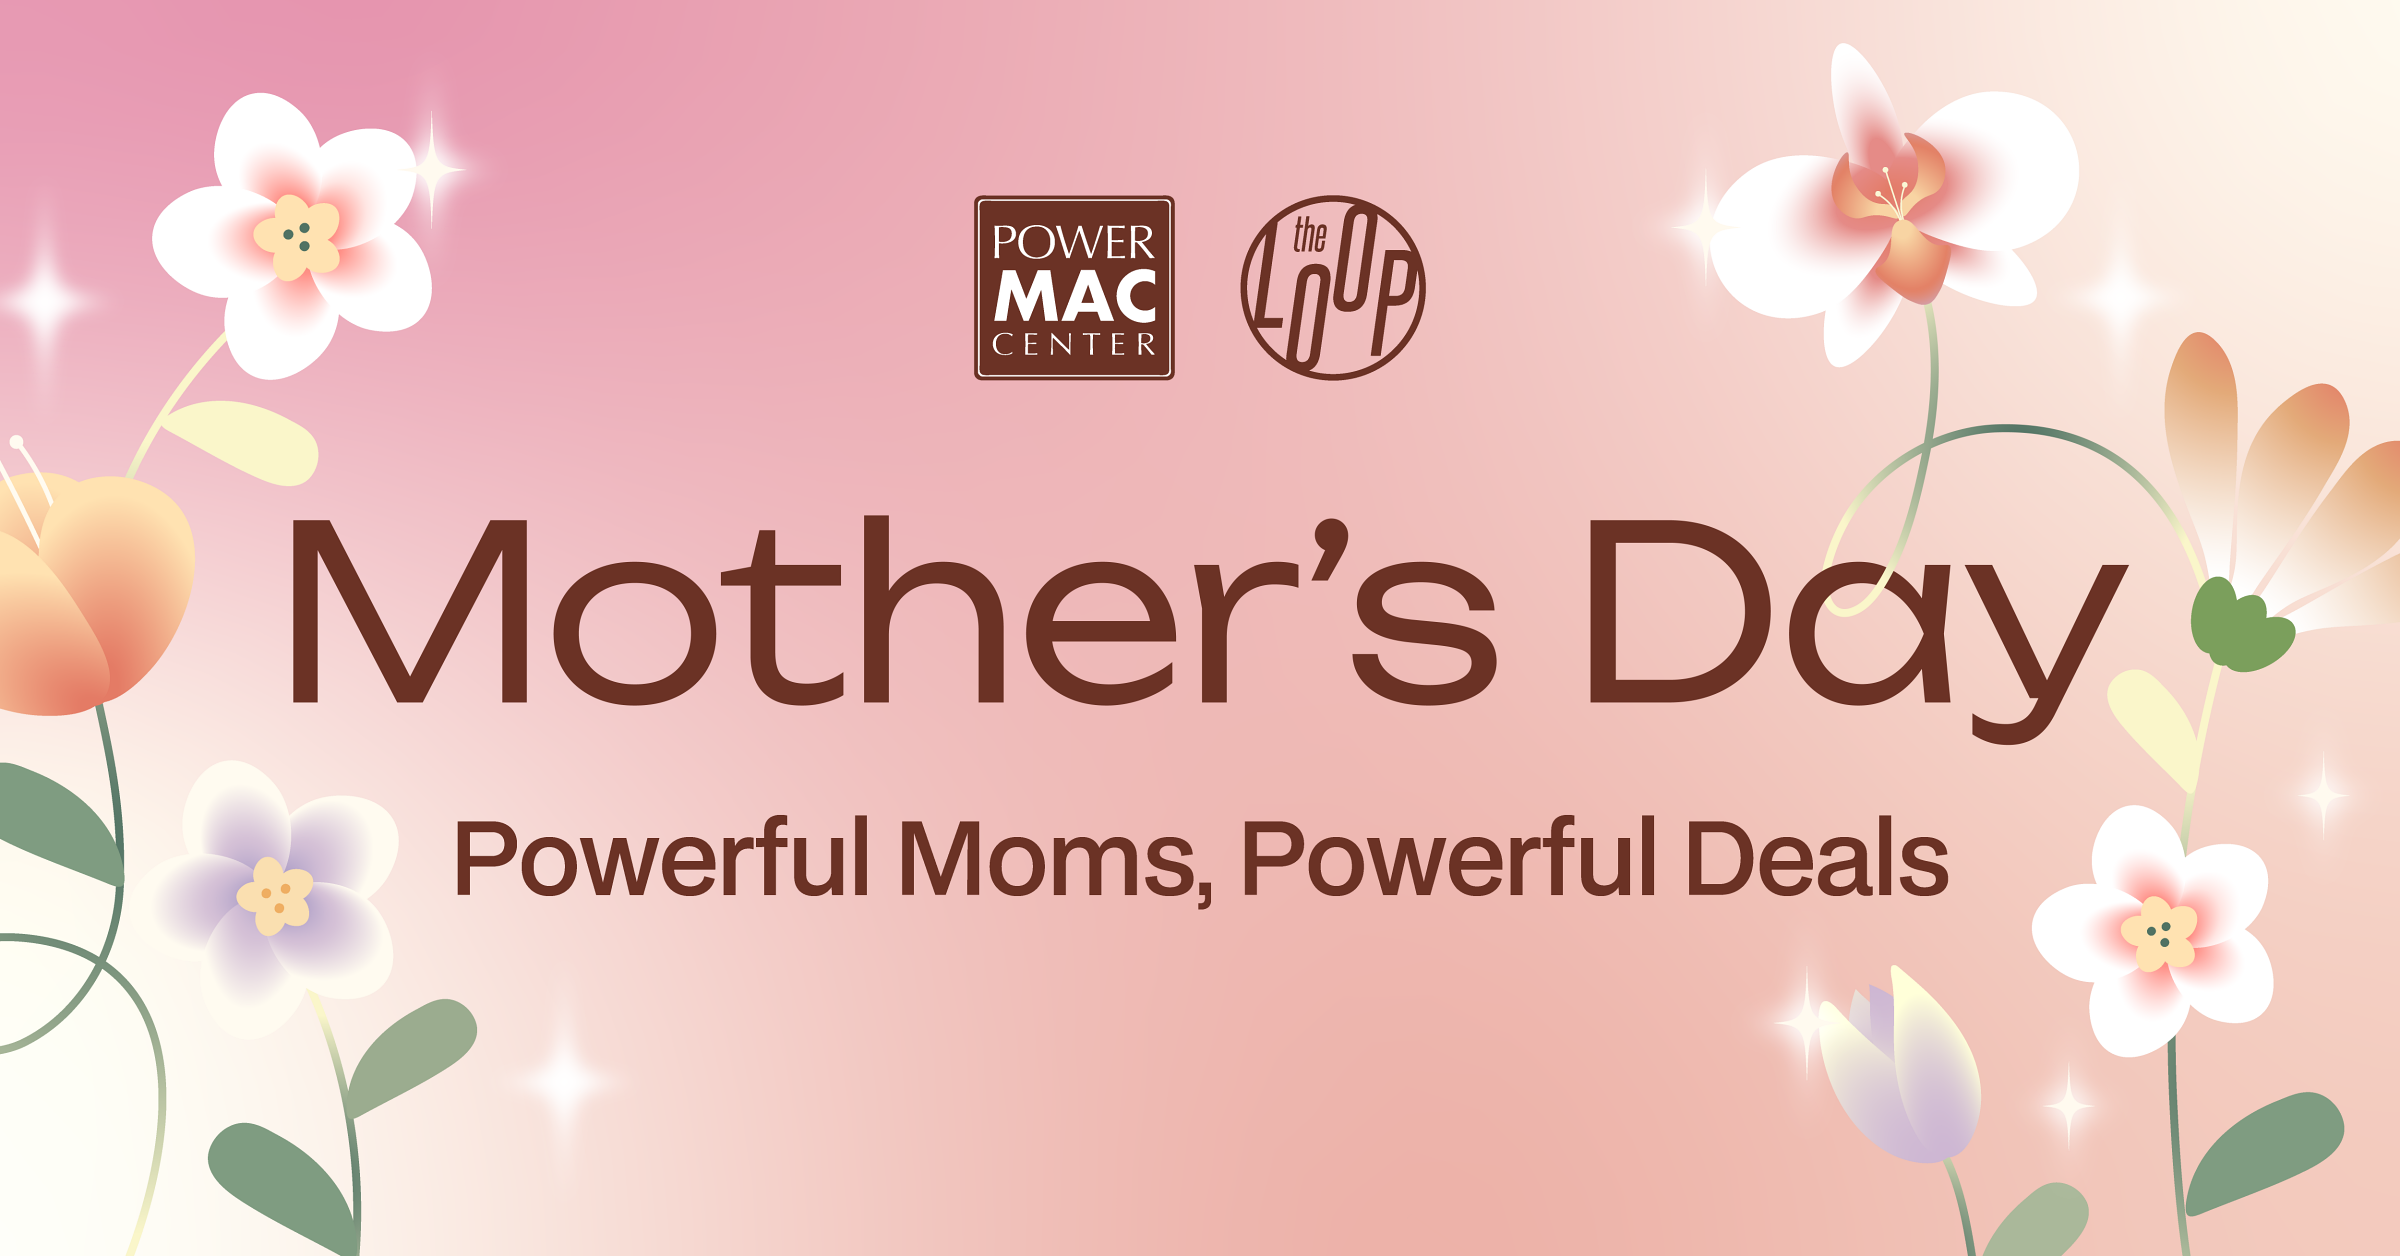 Powerful Moms, Powerful Deals Power Mac Center celebrates Mother’s